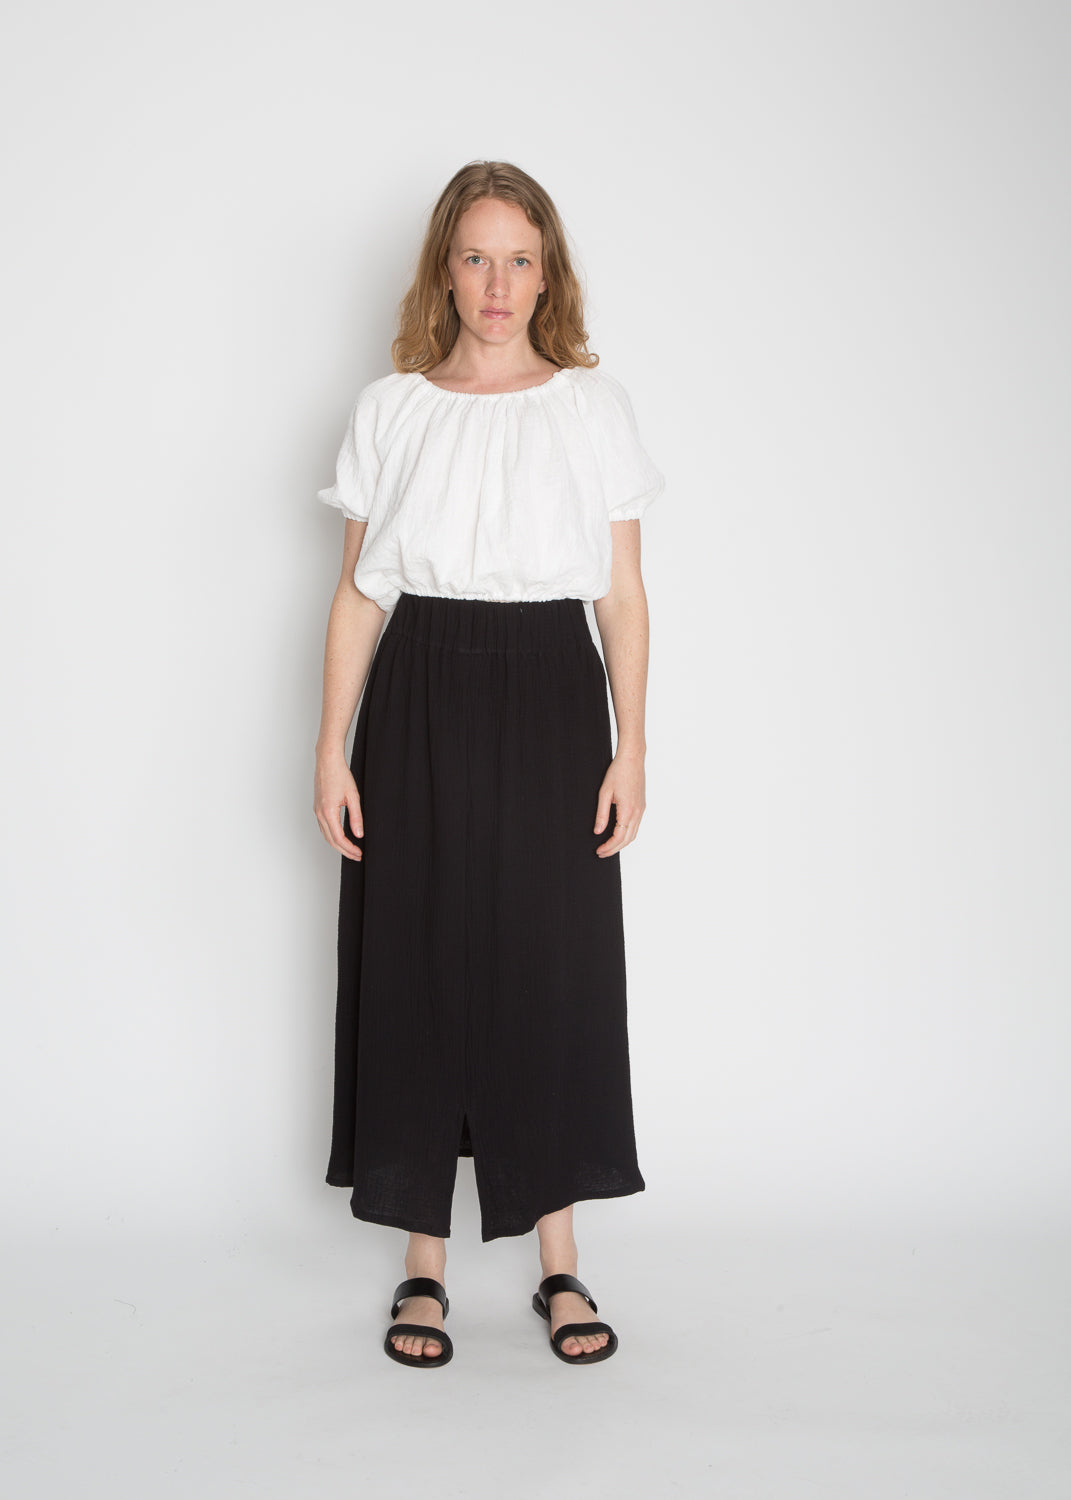 Paper Bag Skirt, Organic Cotton Bubble Gauze in Black